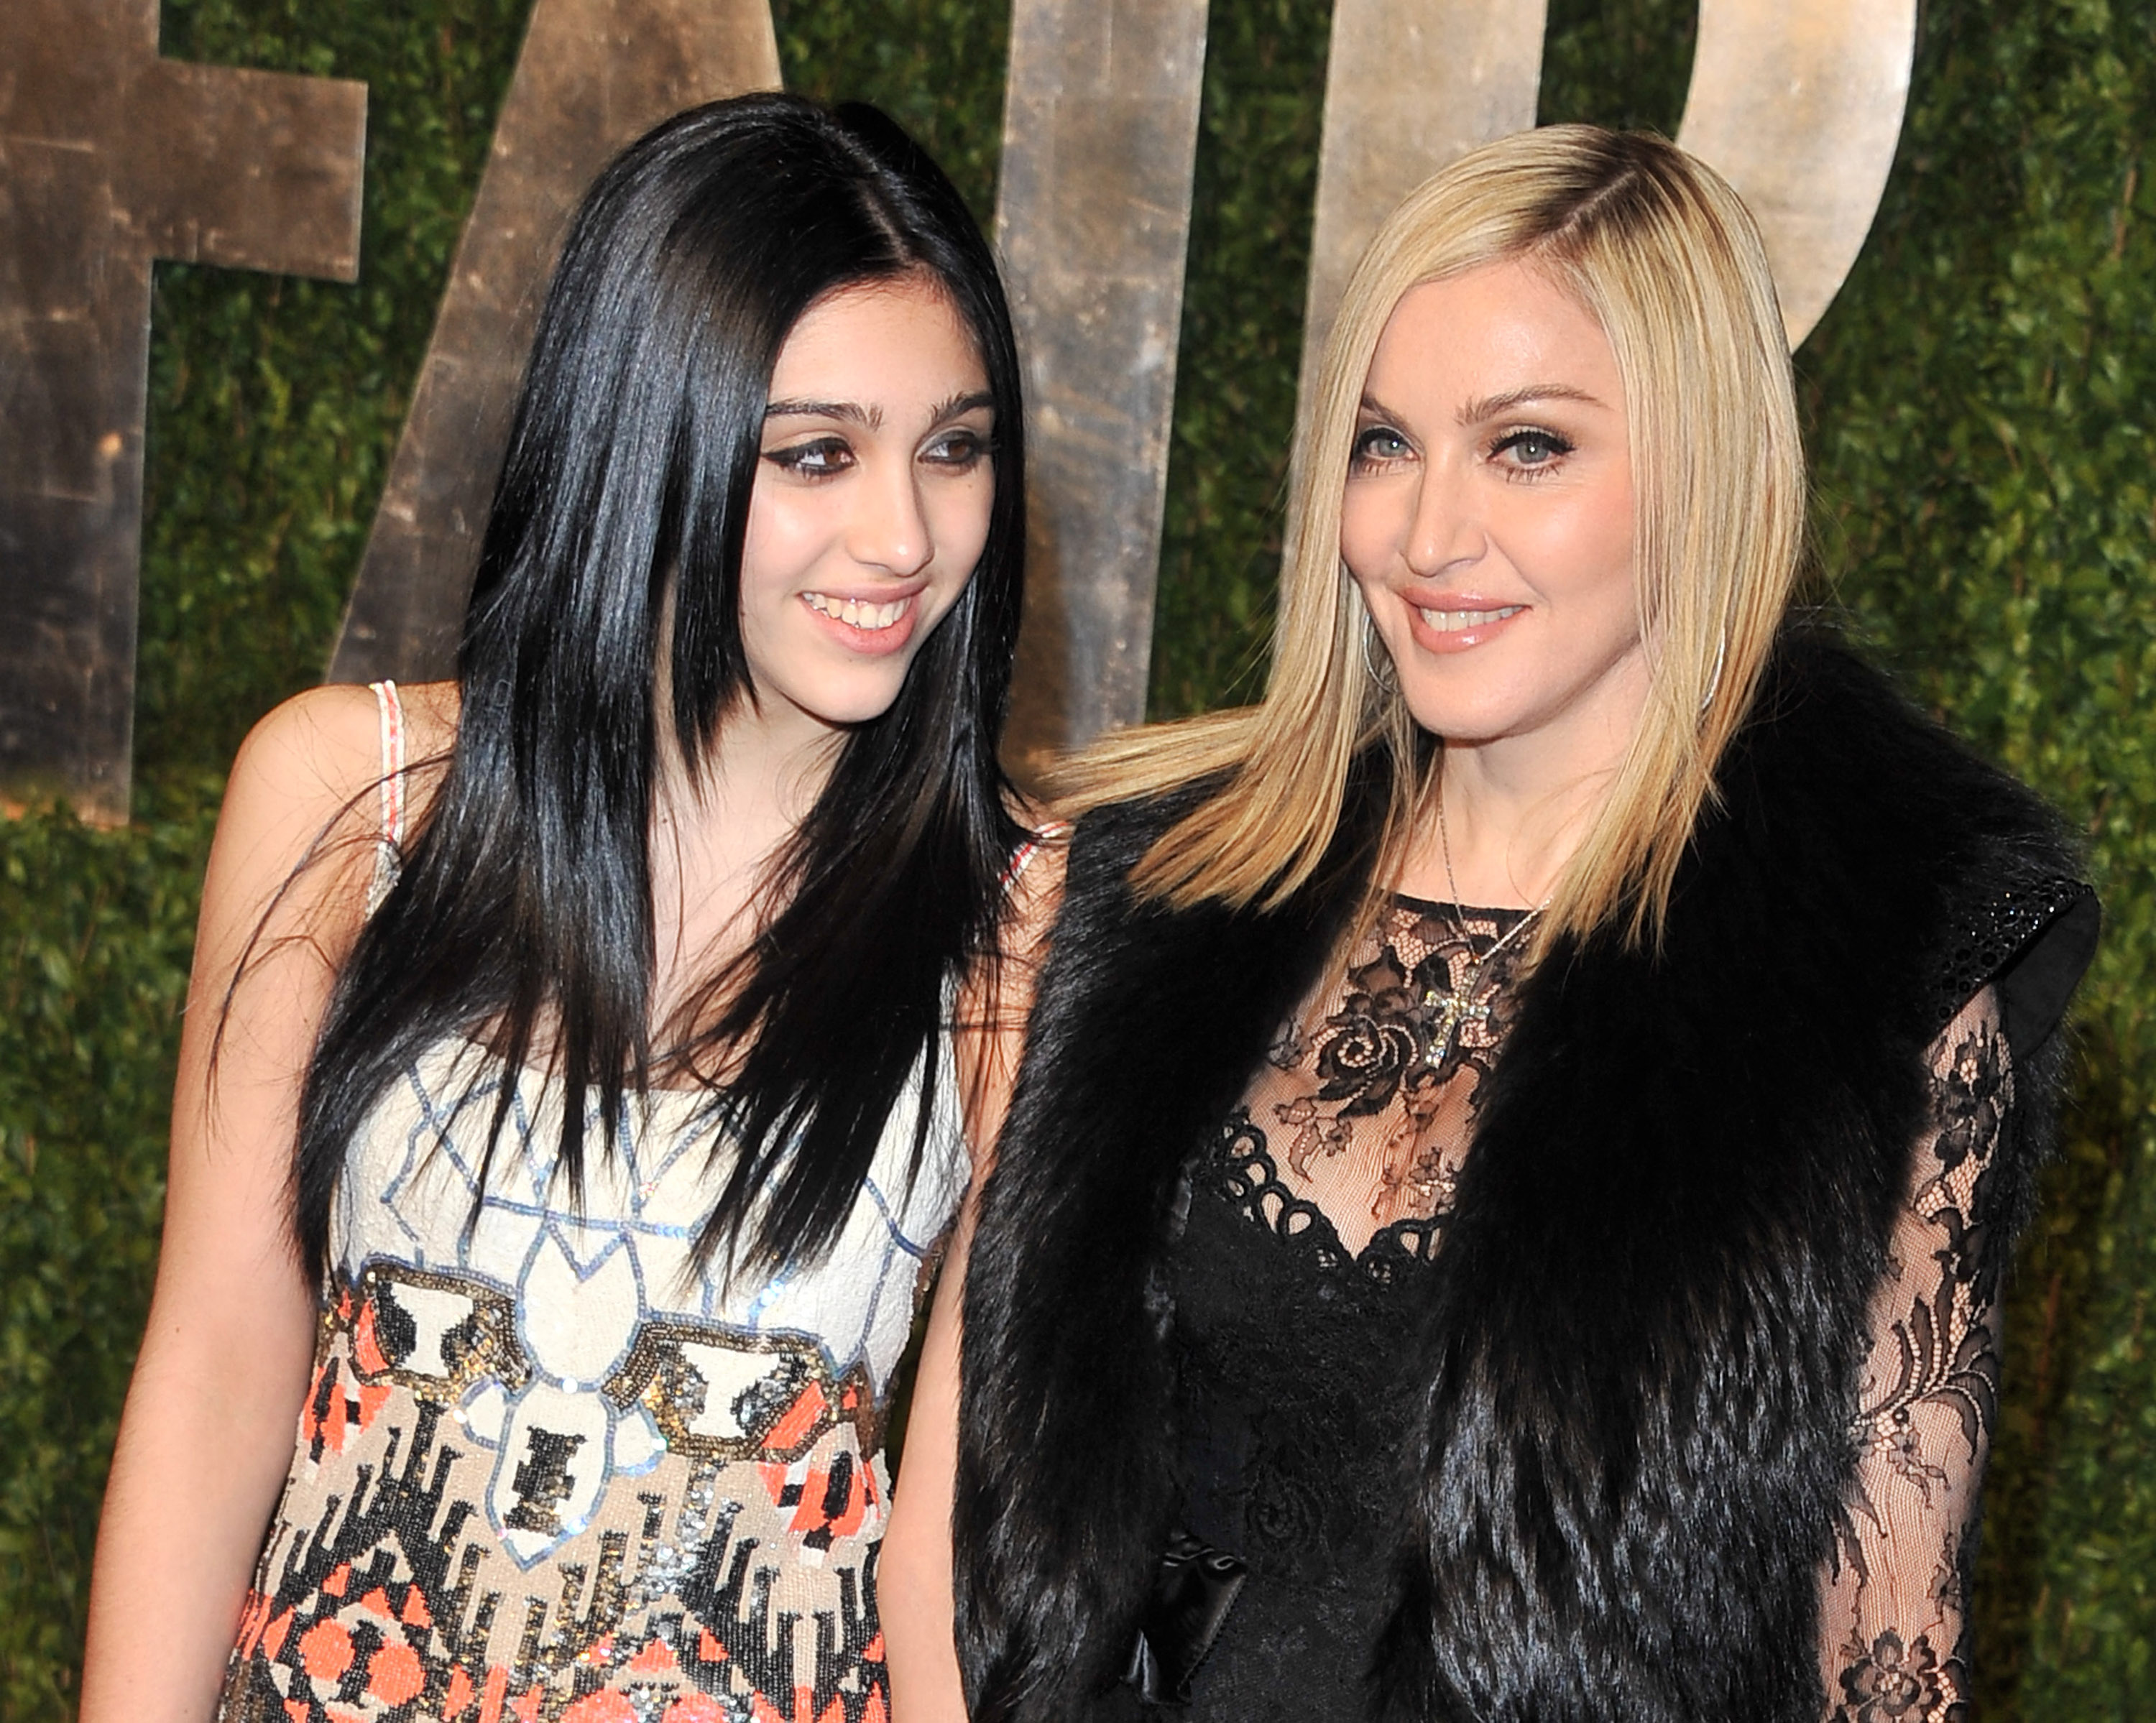 Lourdes Leon wears a multi-colored dress and Madonna wears a black dress and fur vest.